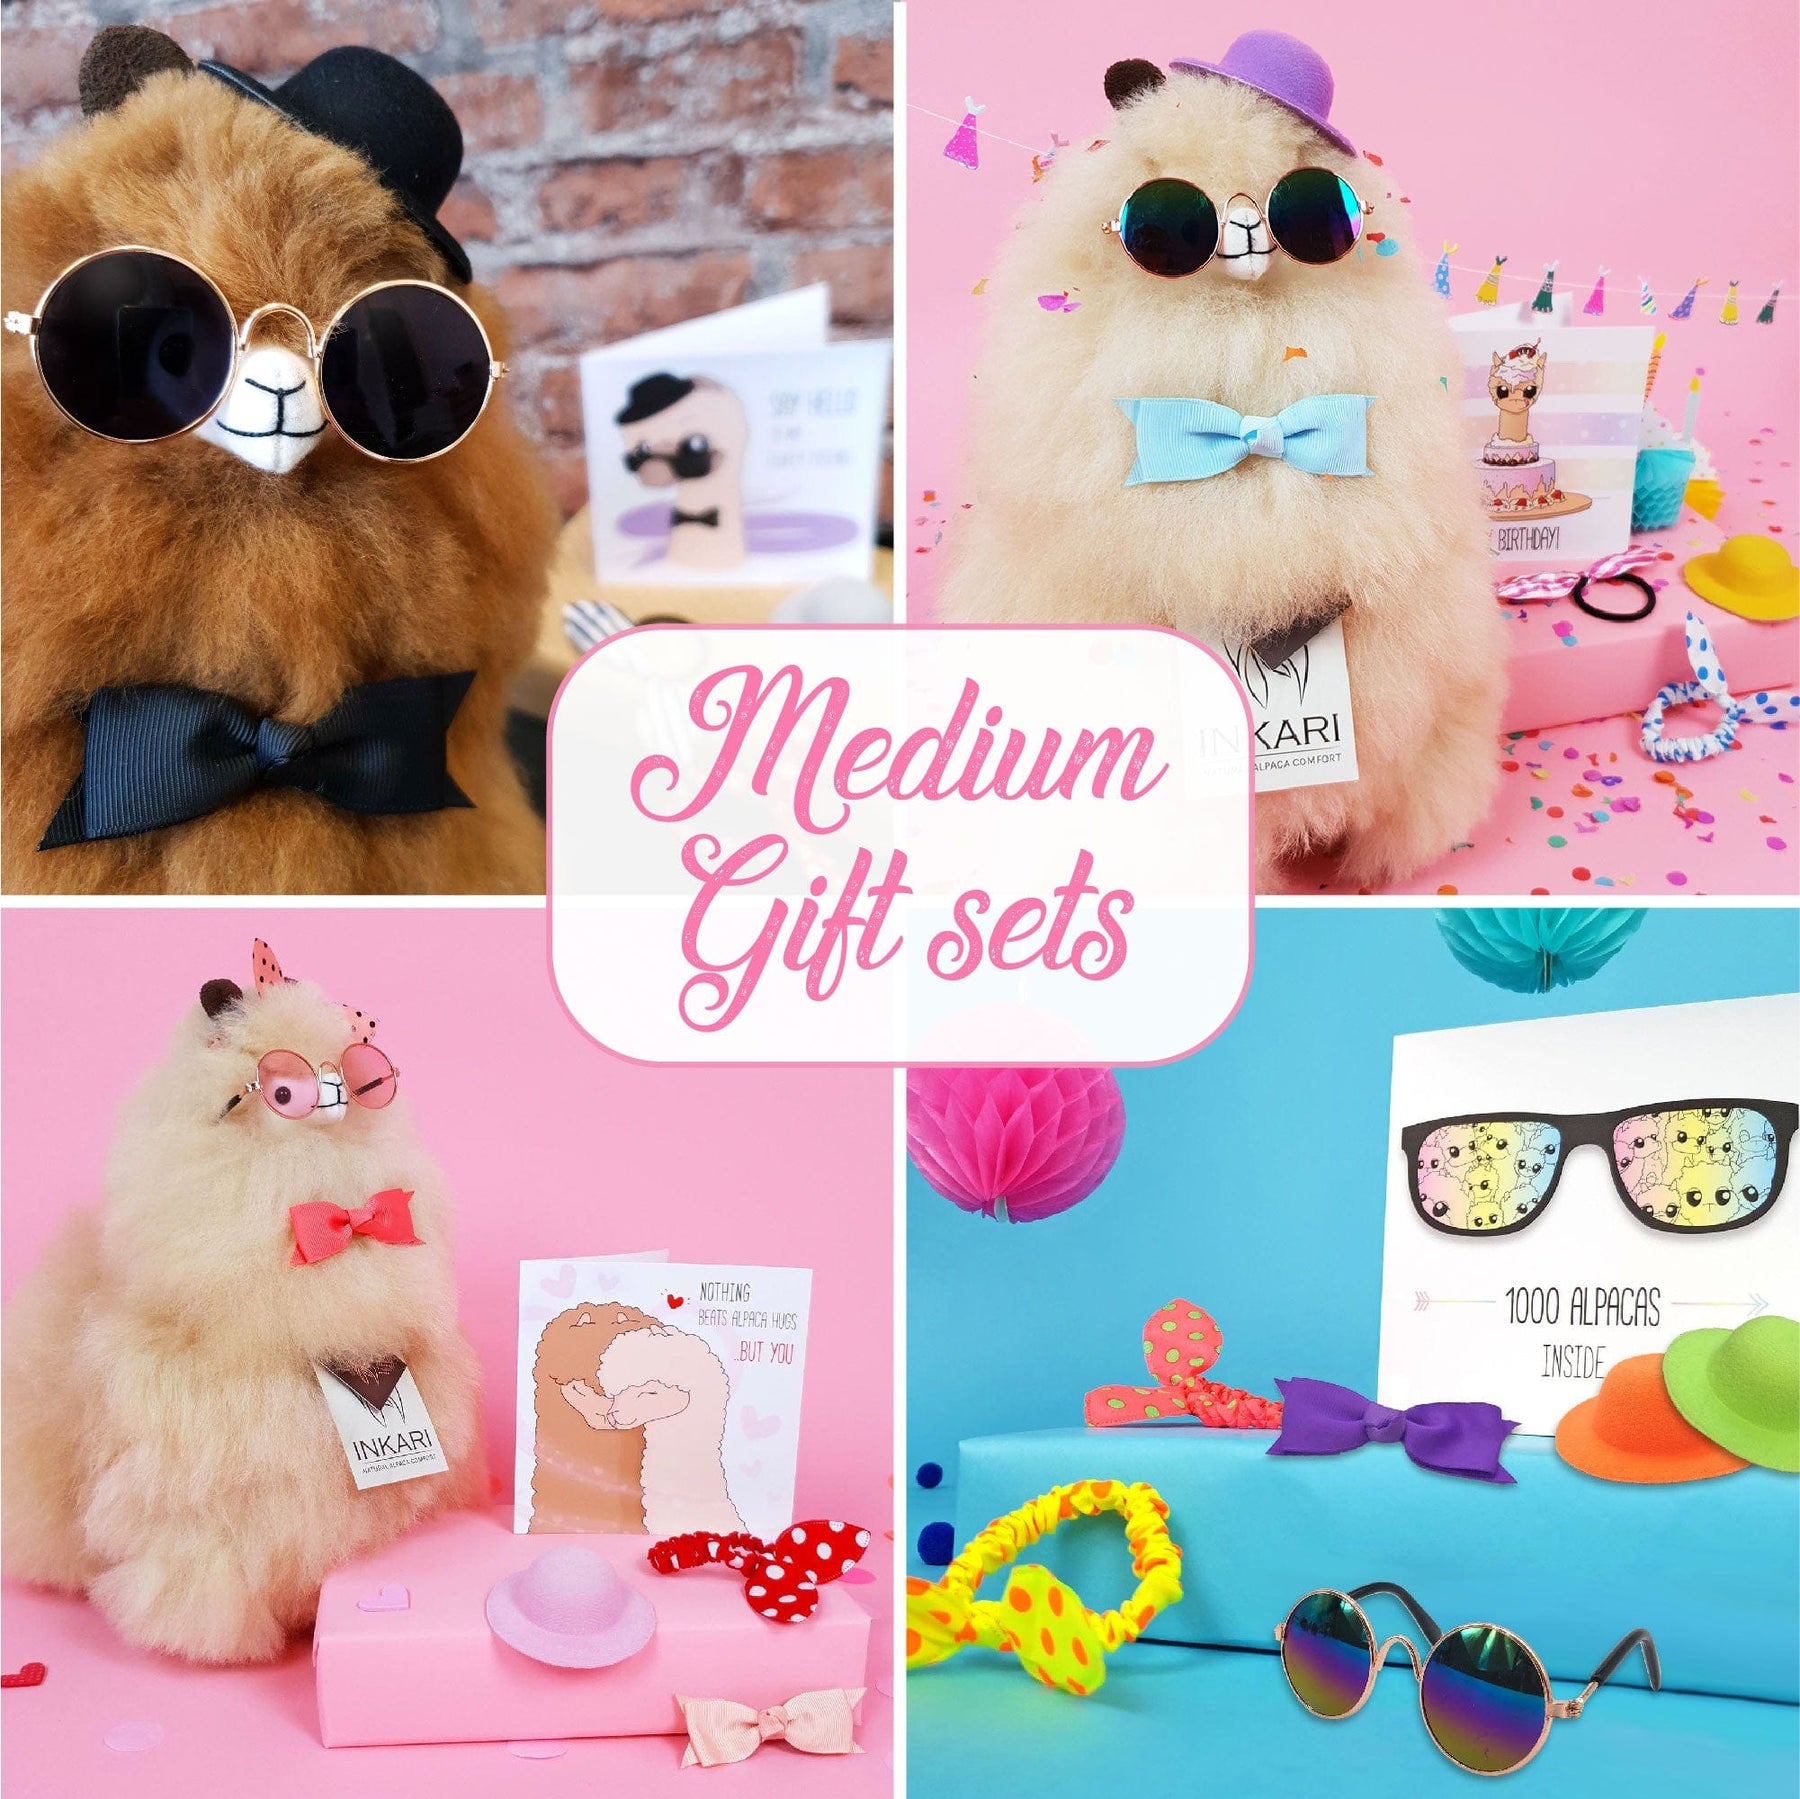 Alpaca Gift Sets ❤ MEDIUM ❤ Birthday - Stuffed Animal - alpaca gift - hypoallergenic - inkari.